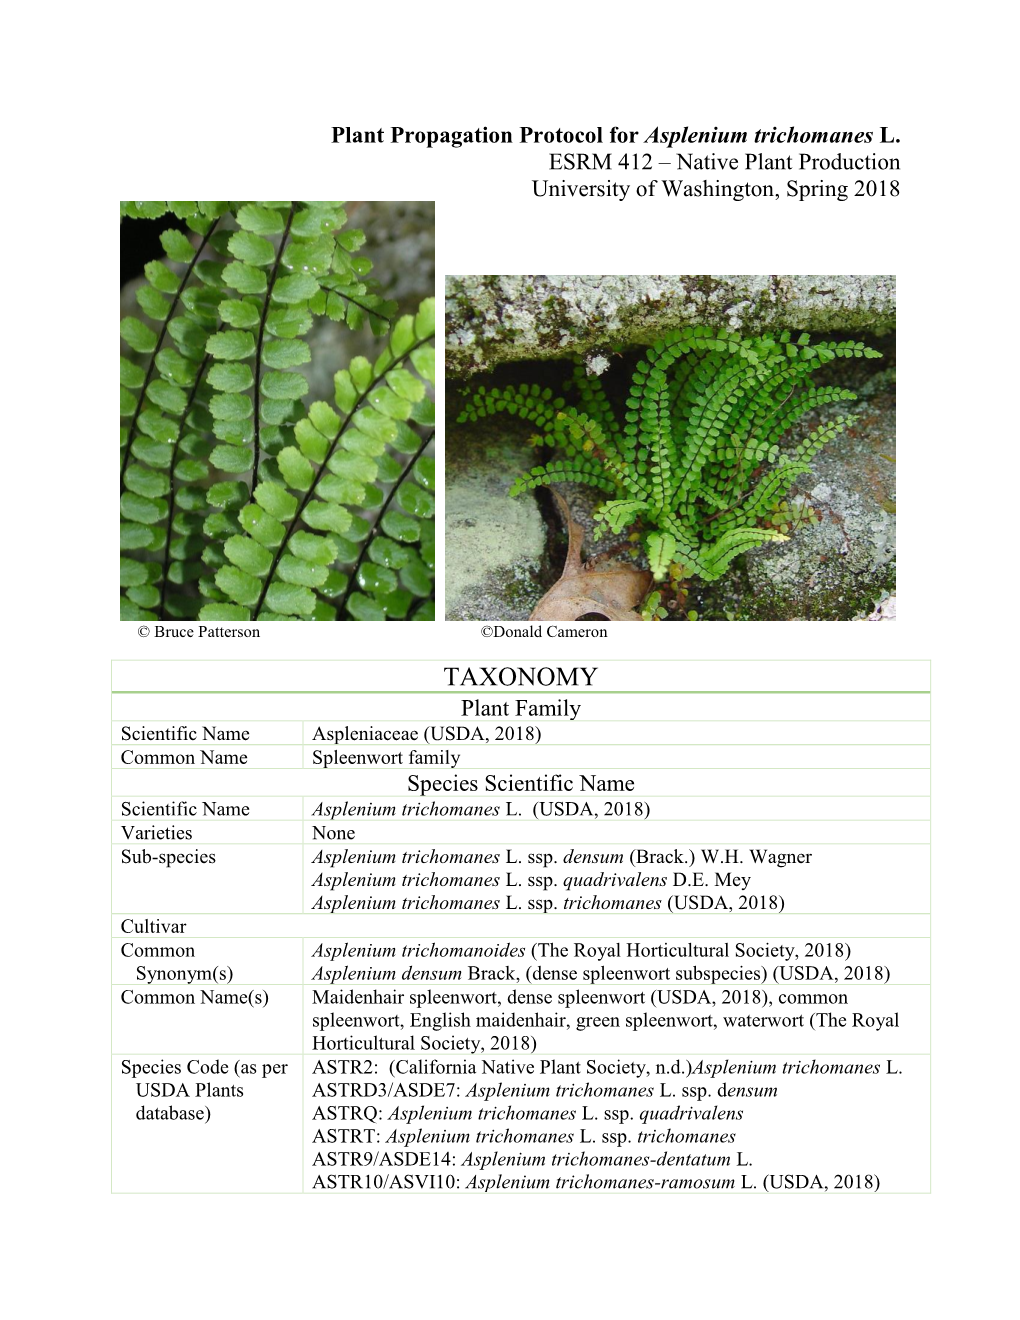 Plant Propagation Protocol for Asplenium Trichomanes L. ESRM 412 – Native Plant Production University of Washington, Spring 2018